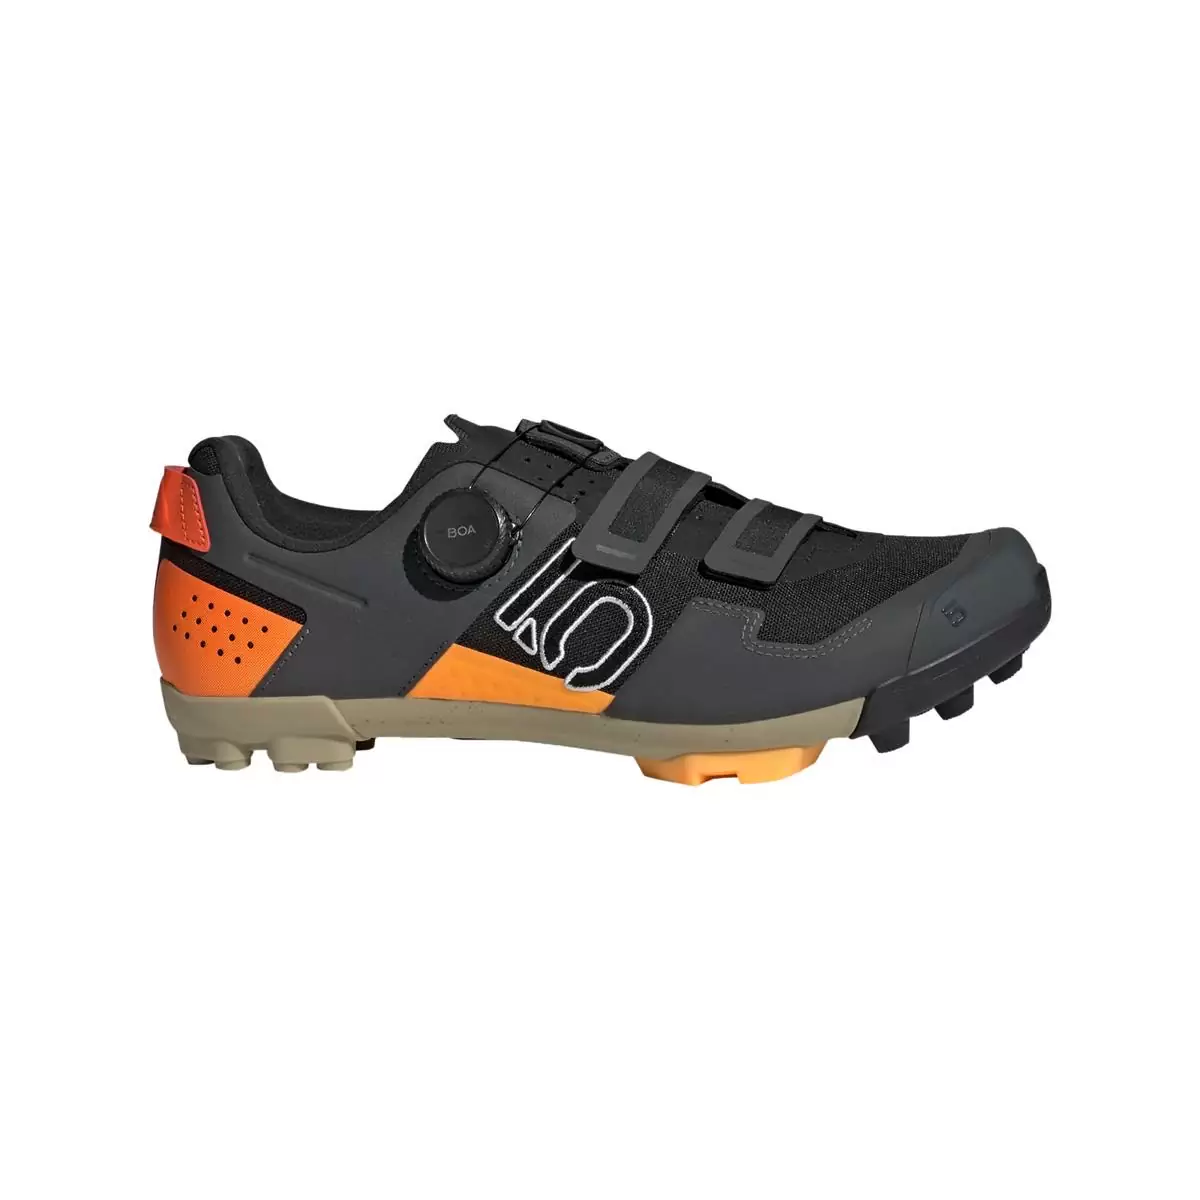 Clip 5.10 Kestrel Boa MTB Shoes Black/Orange Size 41 - image